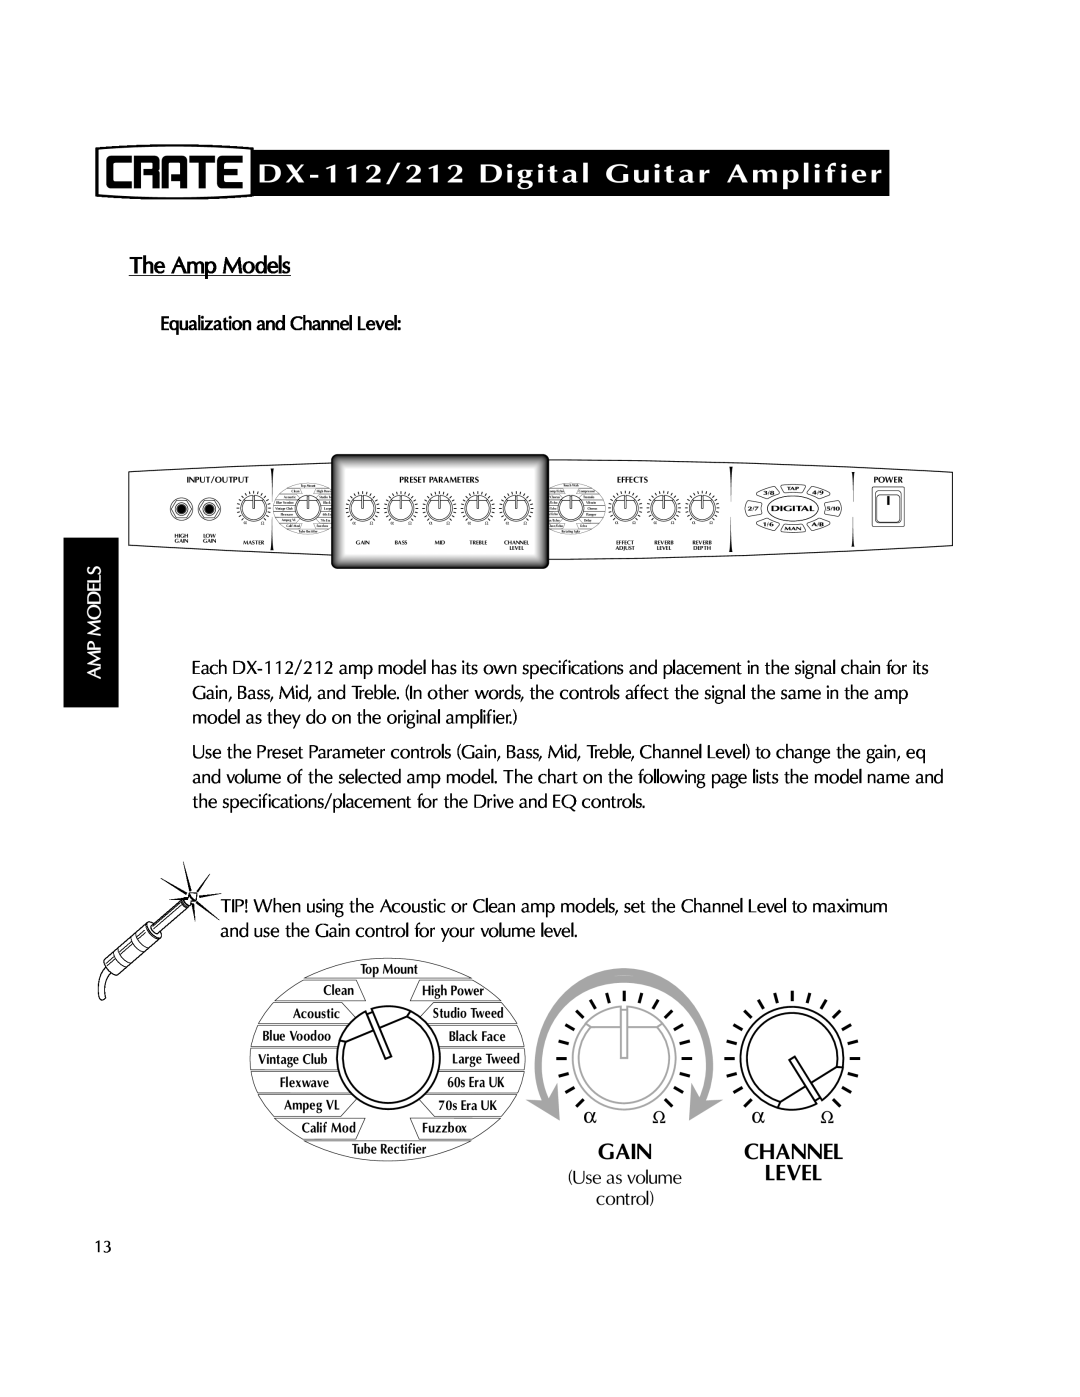 Crate Amplifiers DX-212 manual Gain, Channel, control, DX-112/212Digital Guitar Amplifier, The Amp Models, Level 